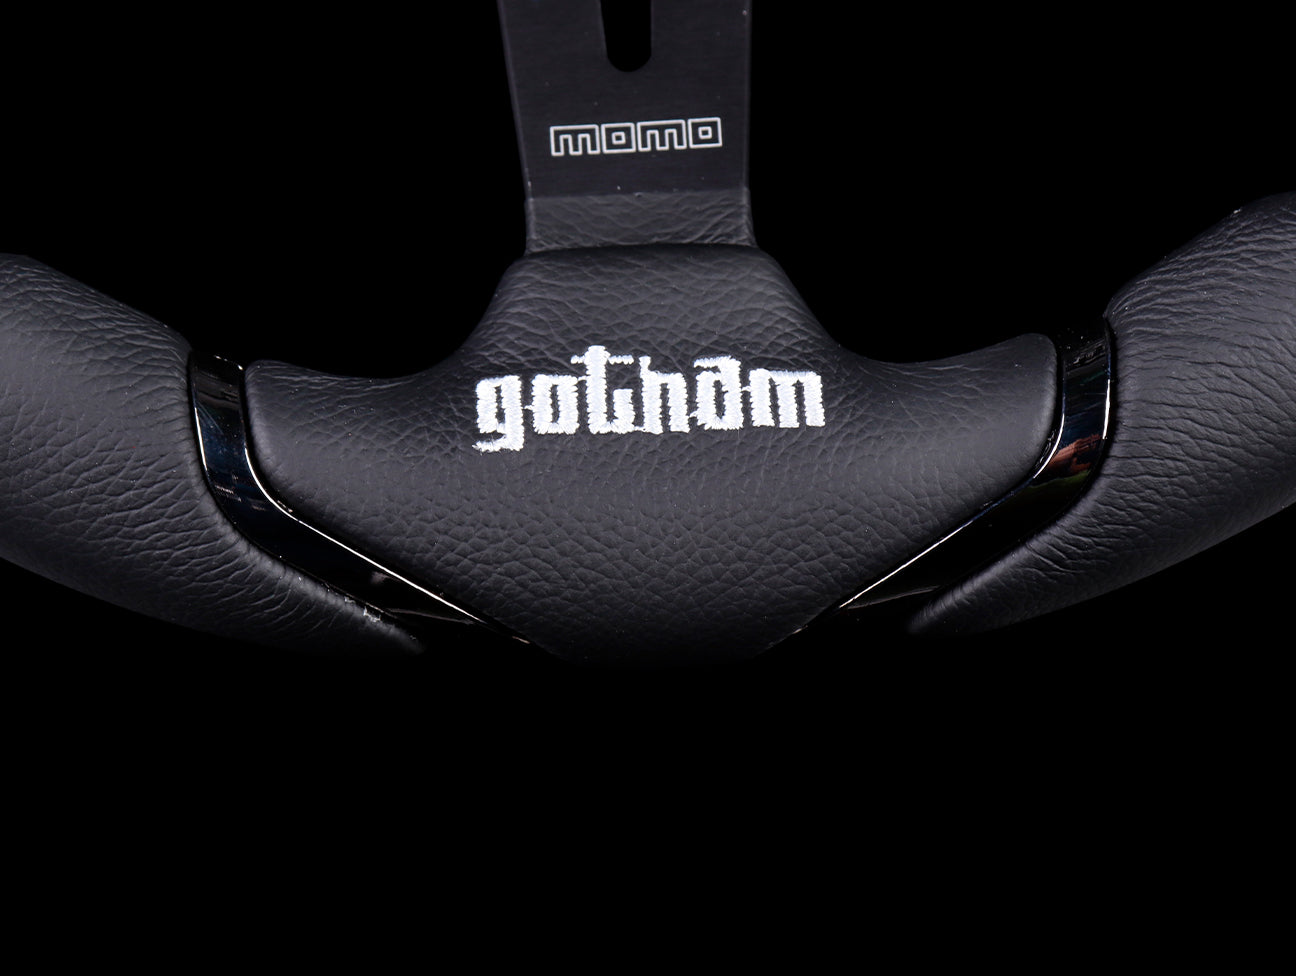 Momo Gotham 350mm Steering Wheel